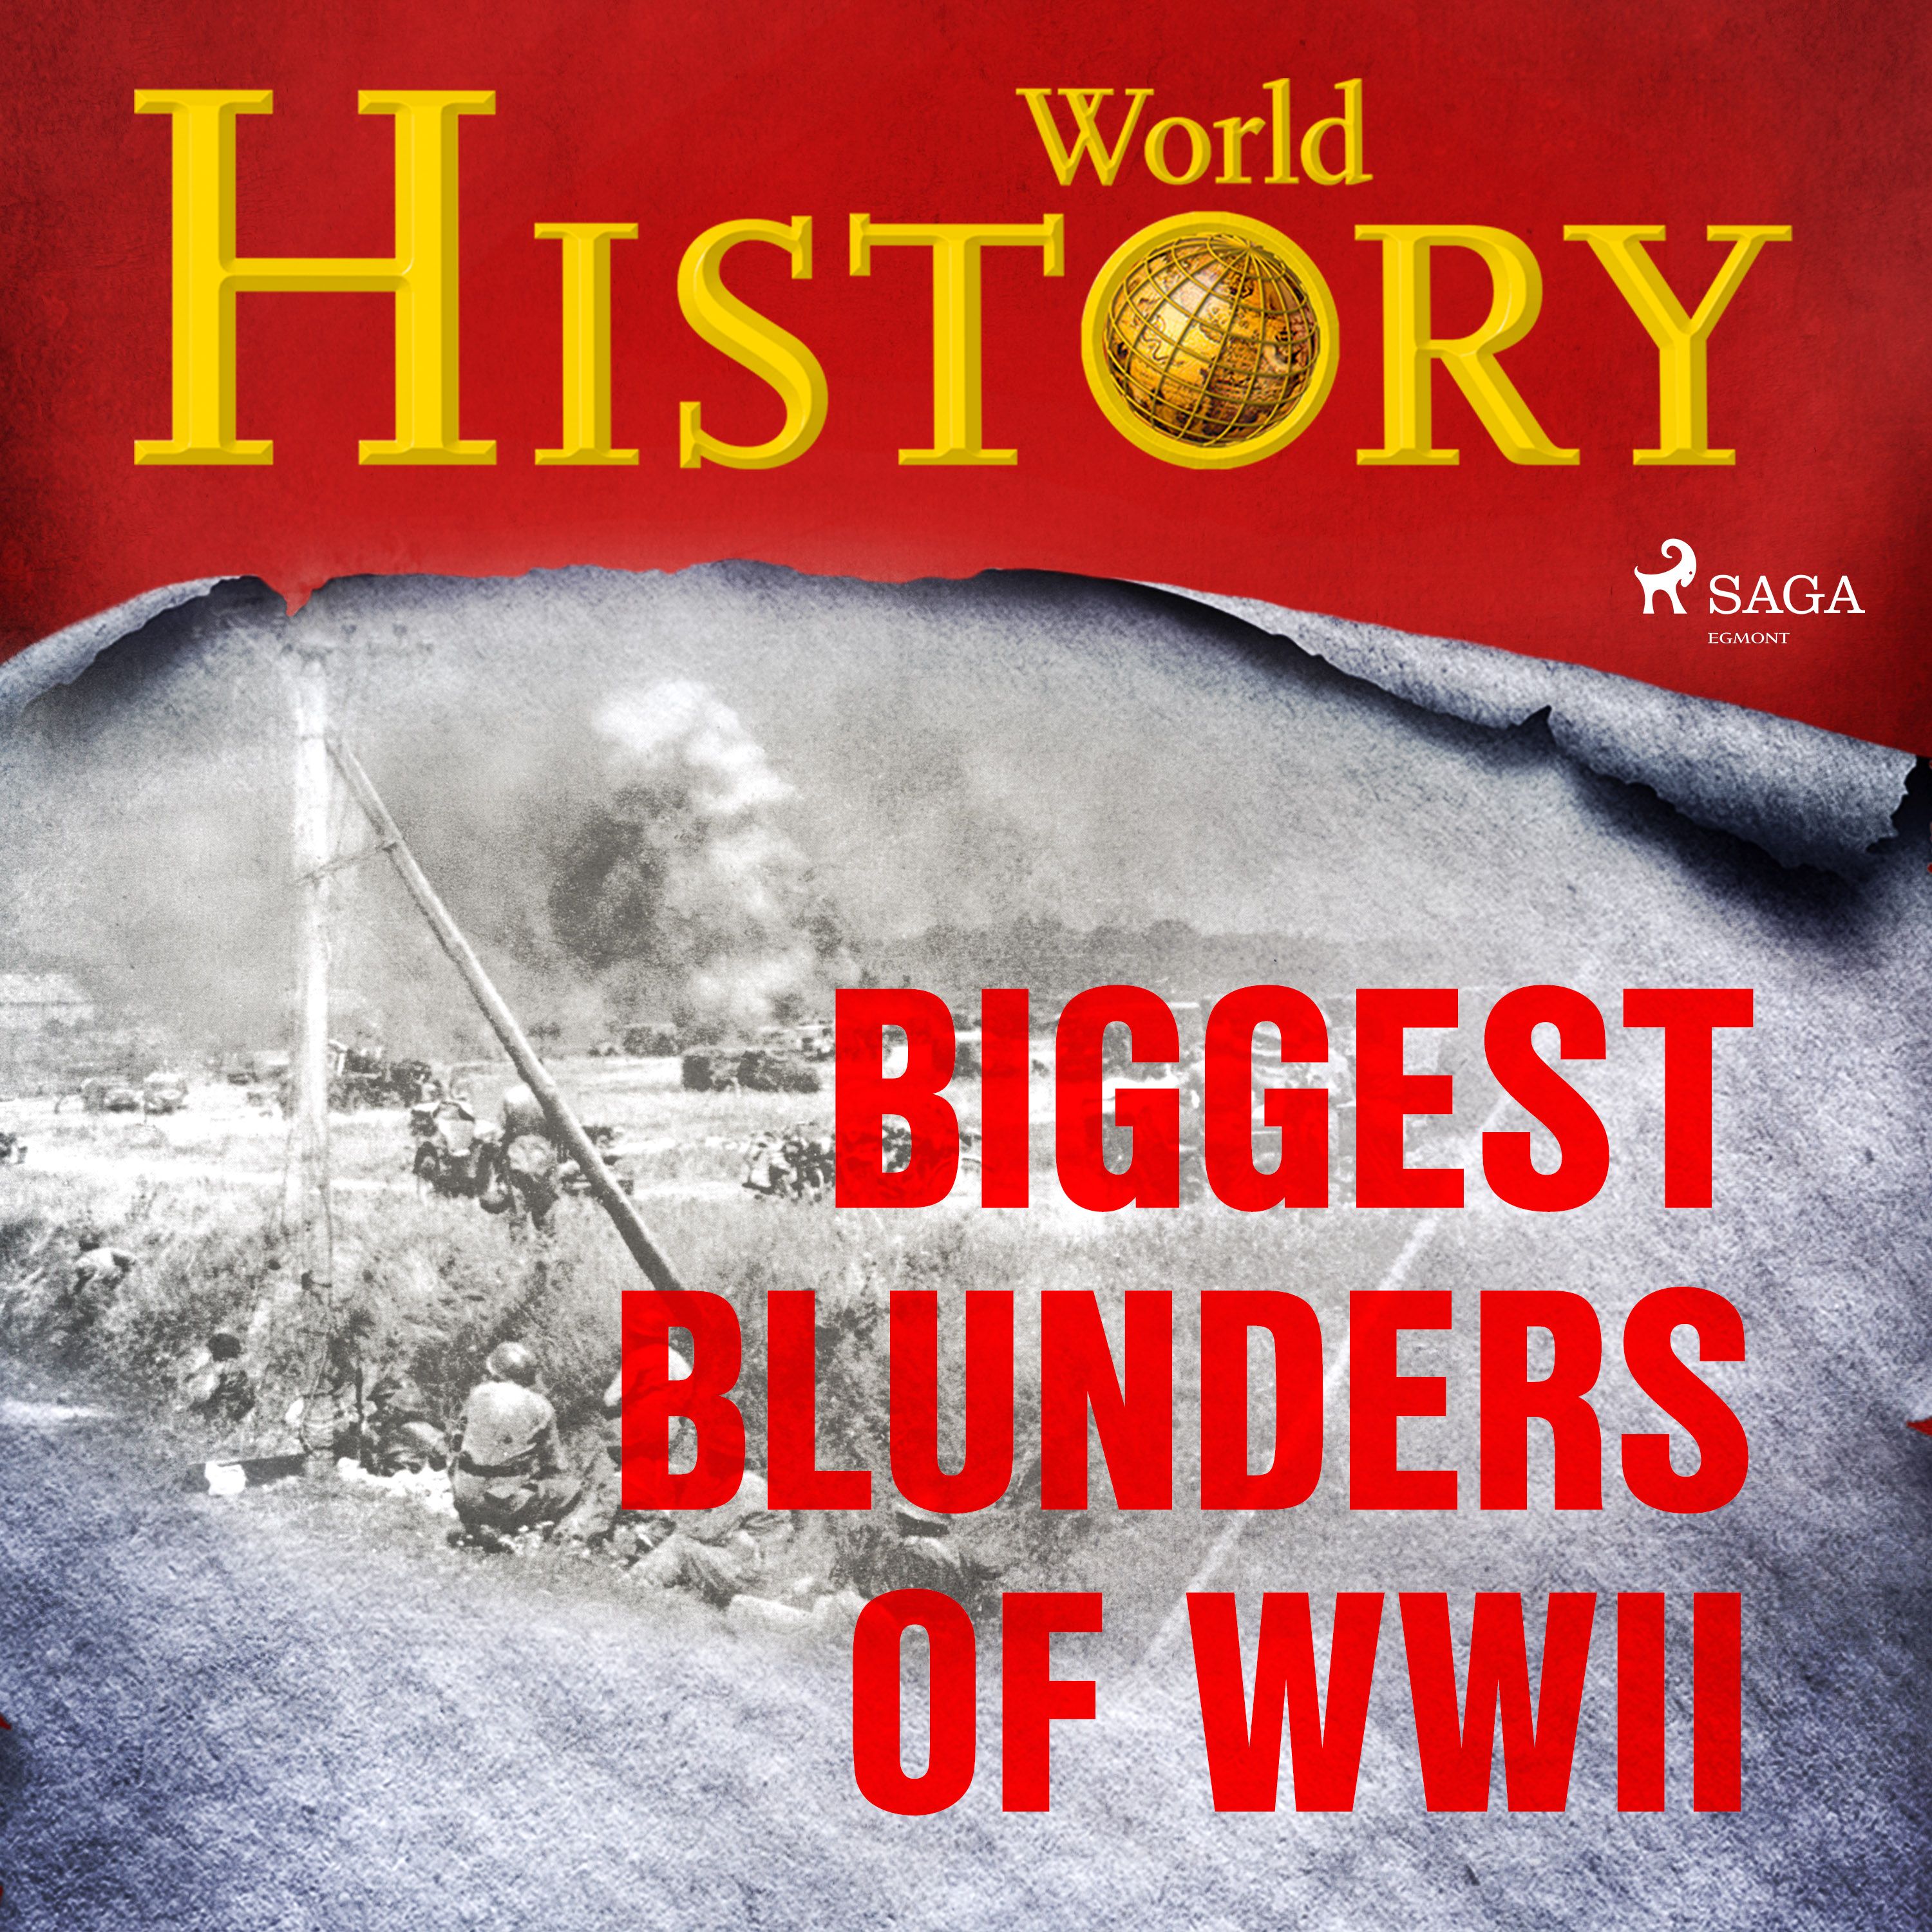 Biggest Blunders of WWII, ljudbok av World History